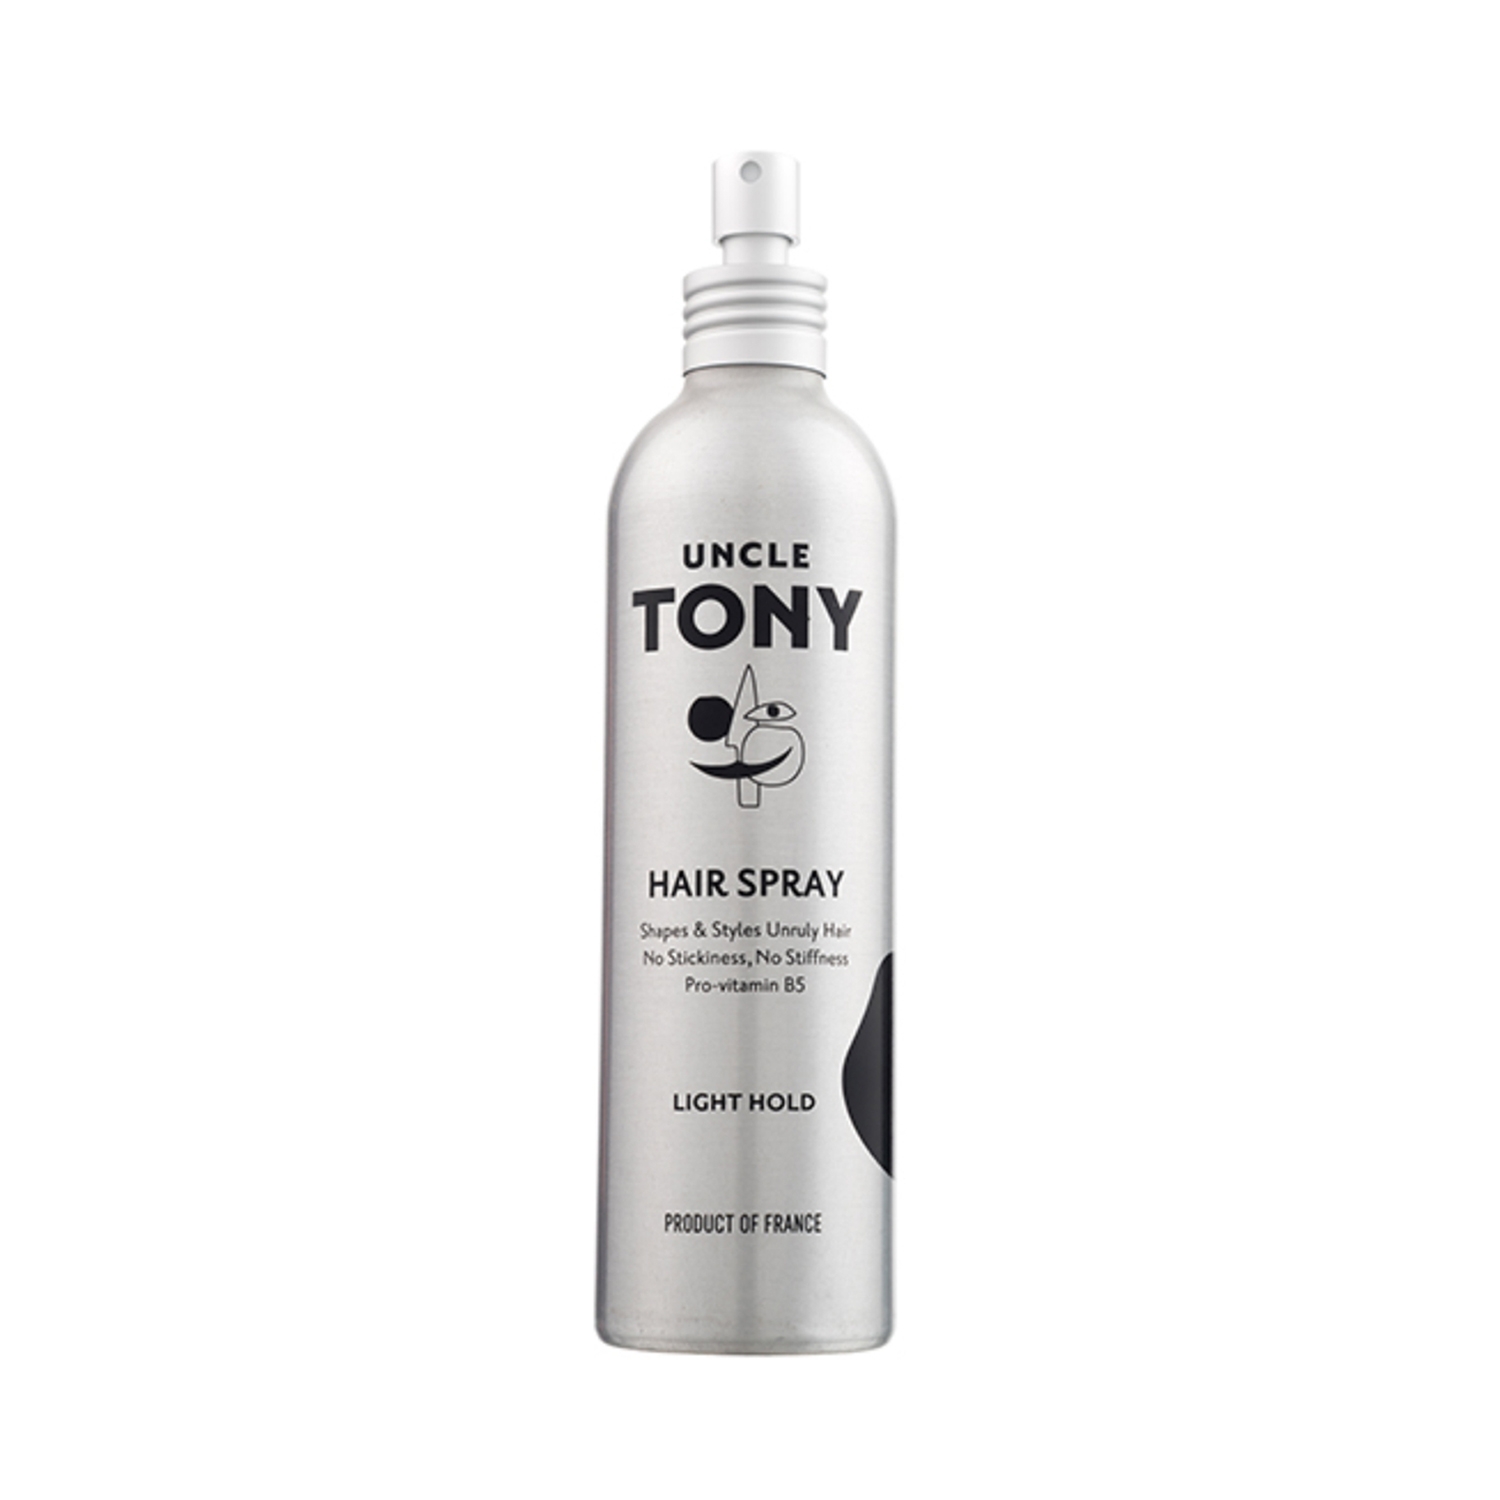 Uncle Tony Light Hold Hair Spray (250ml)